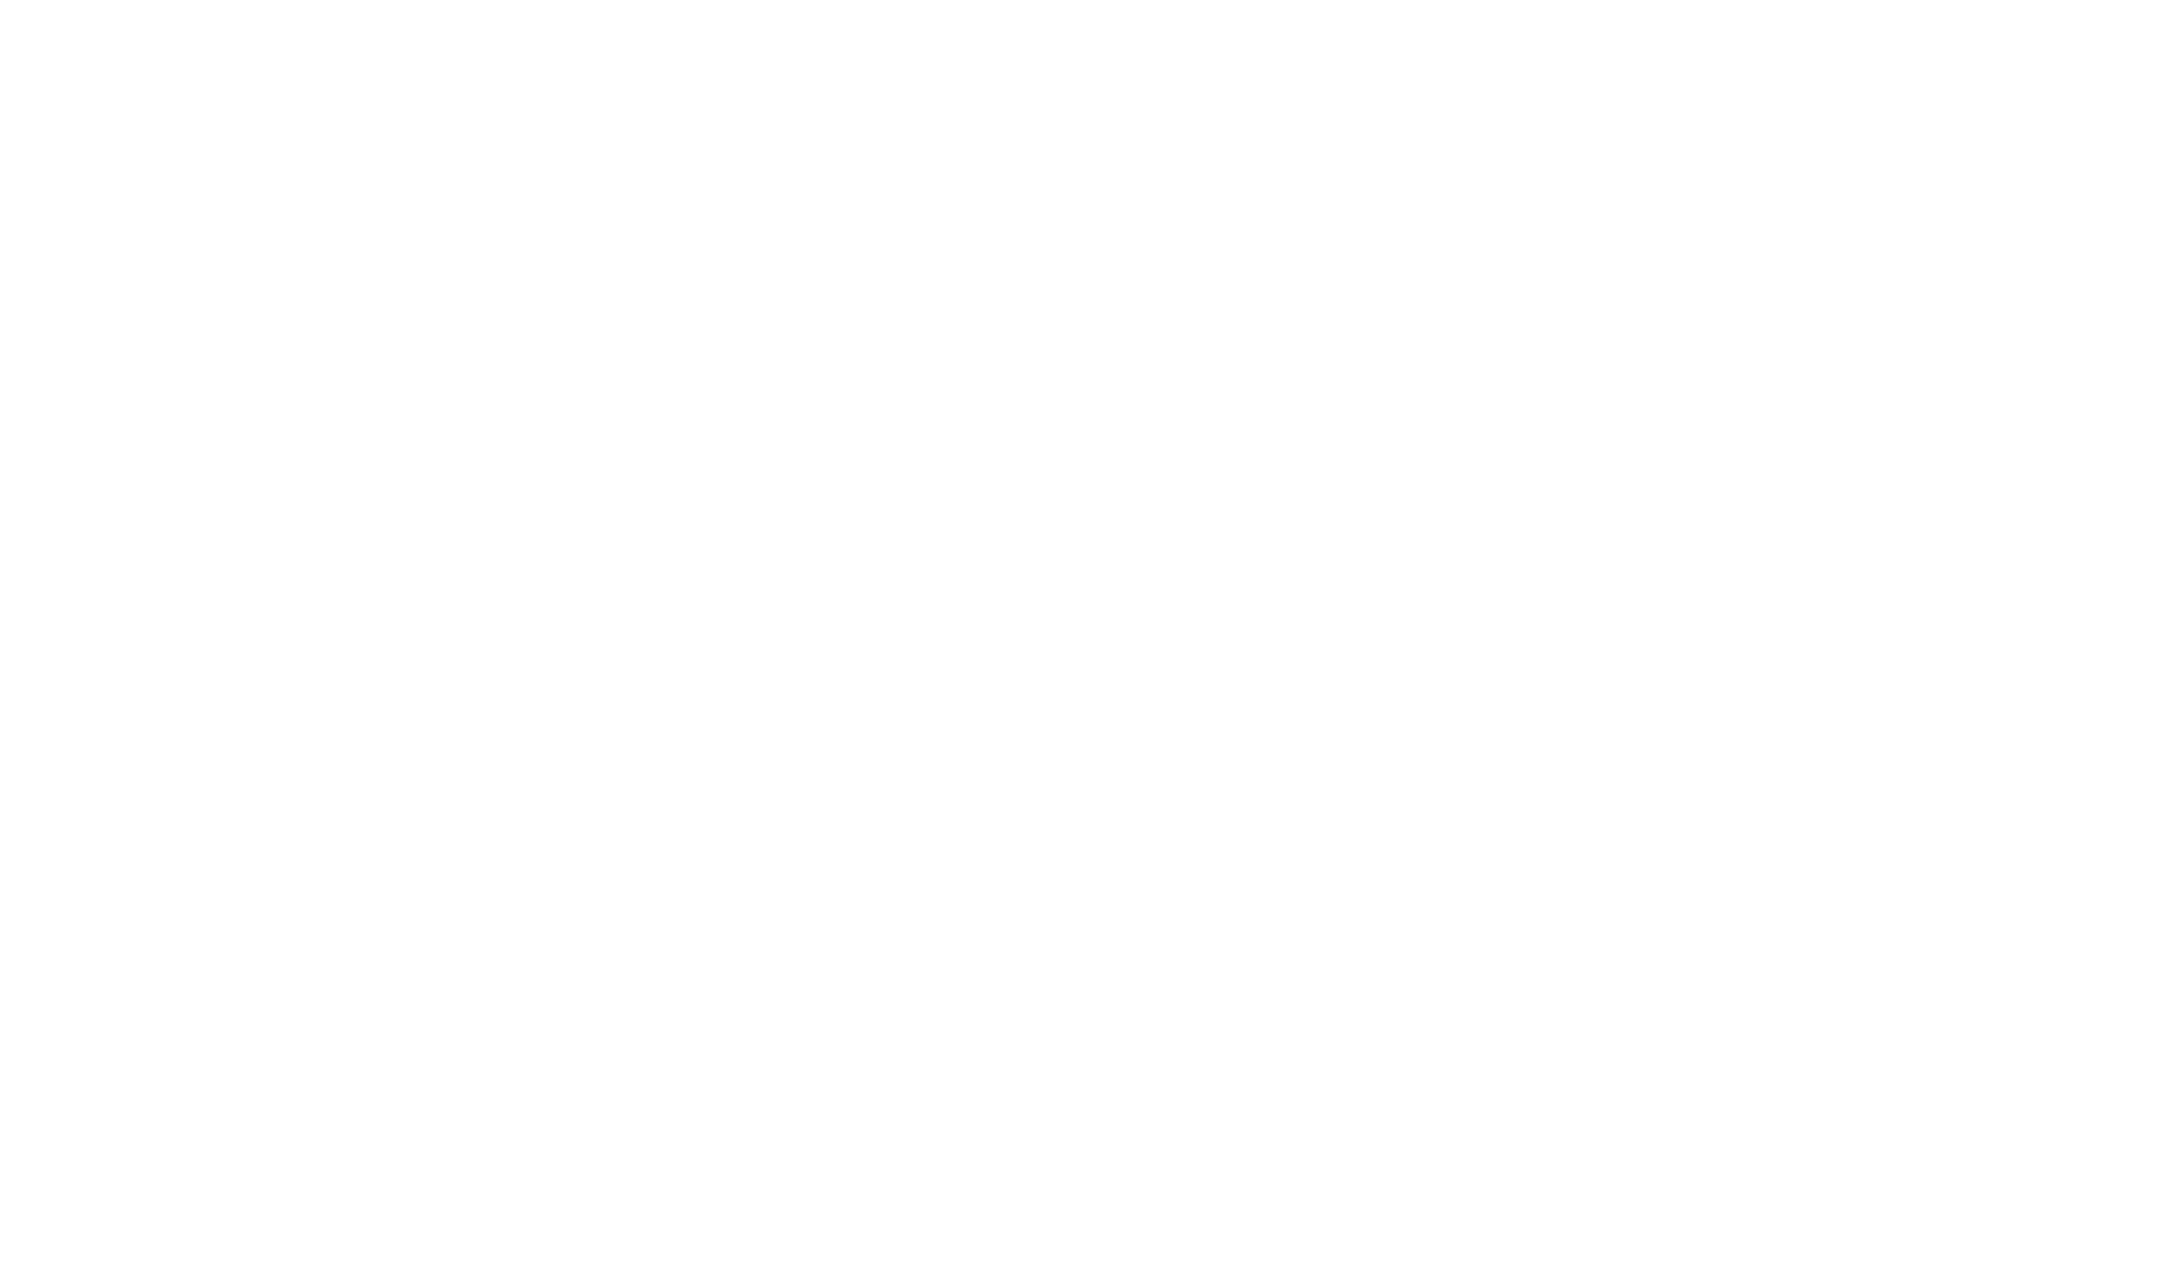 cnn-international-logo-png-transparent